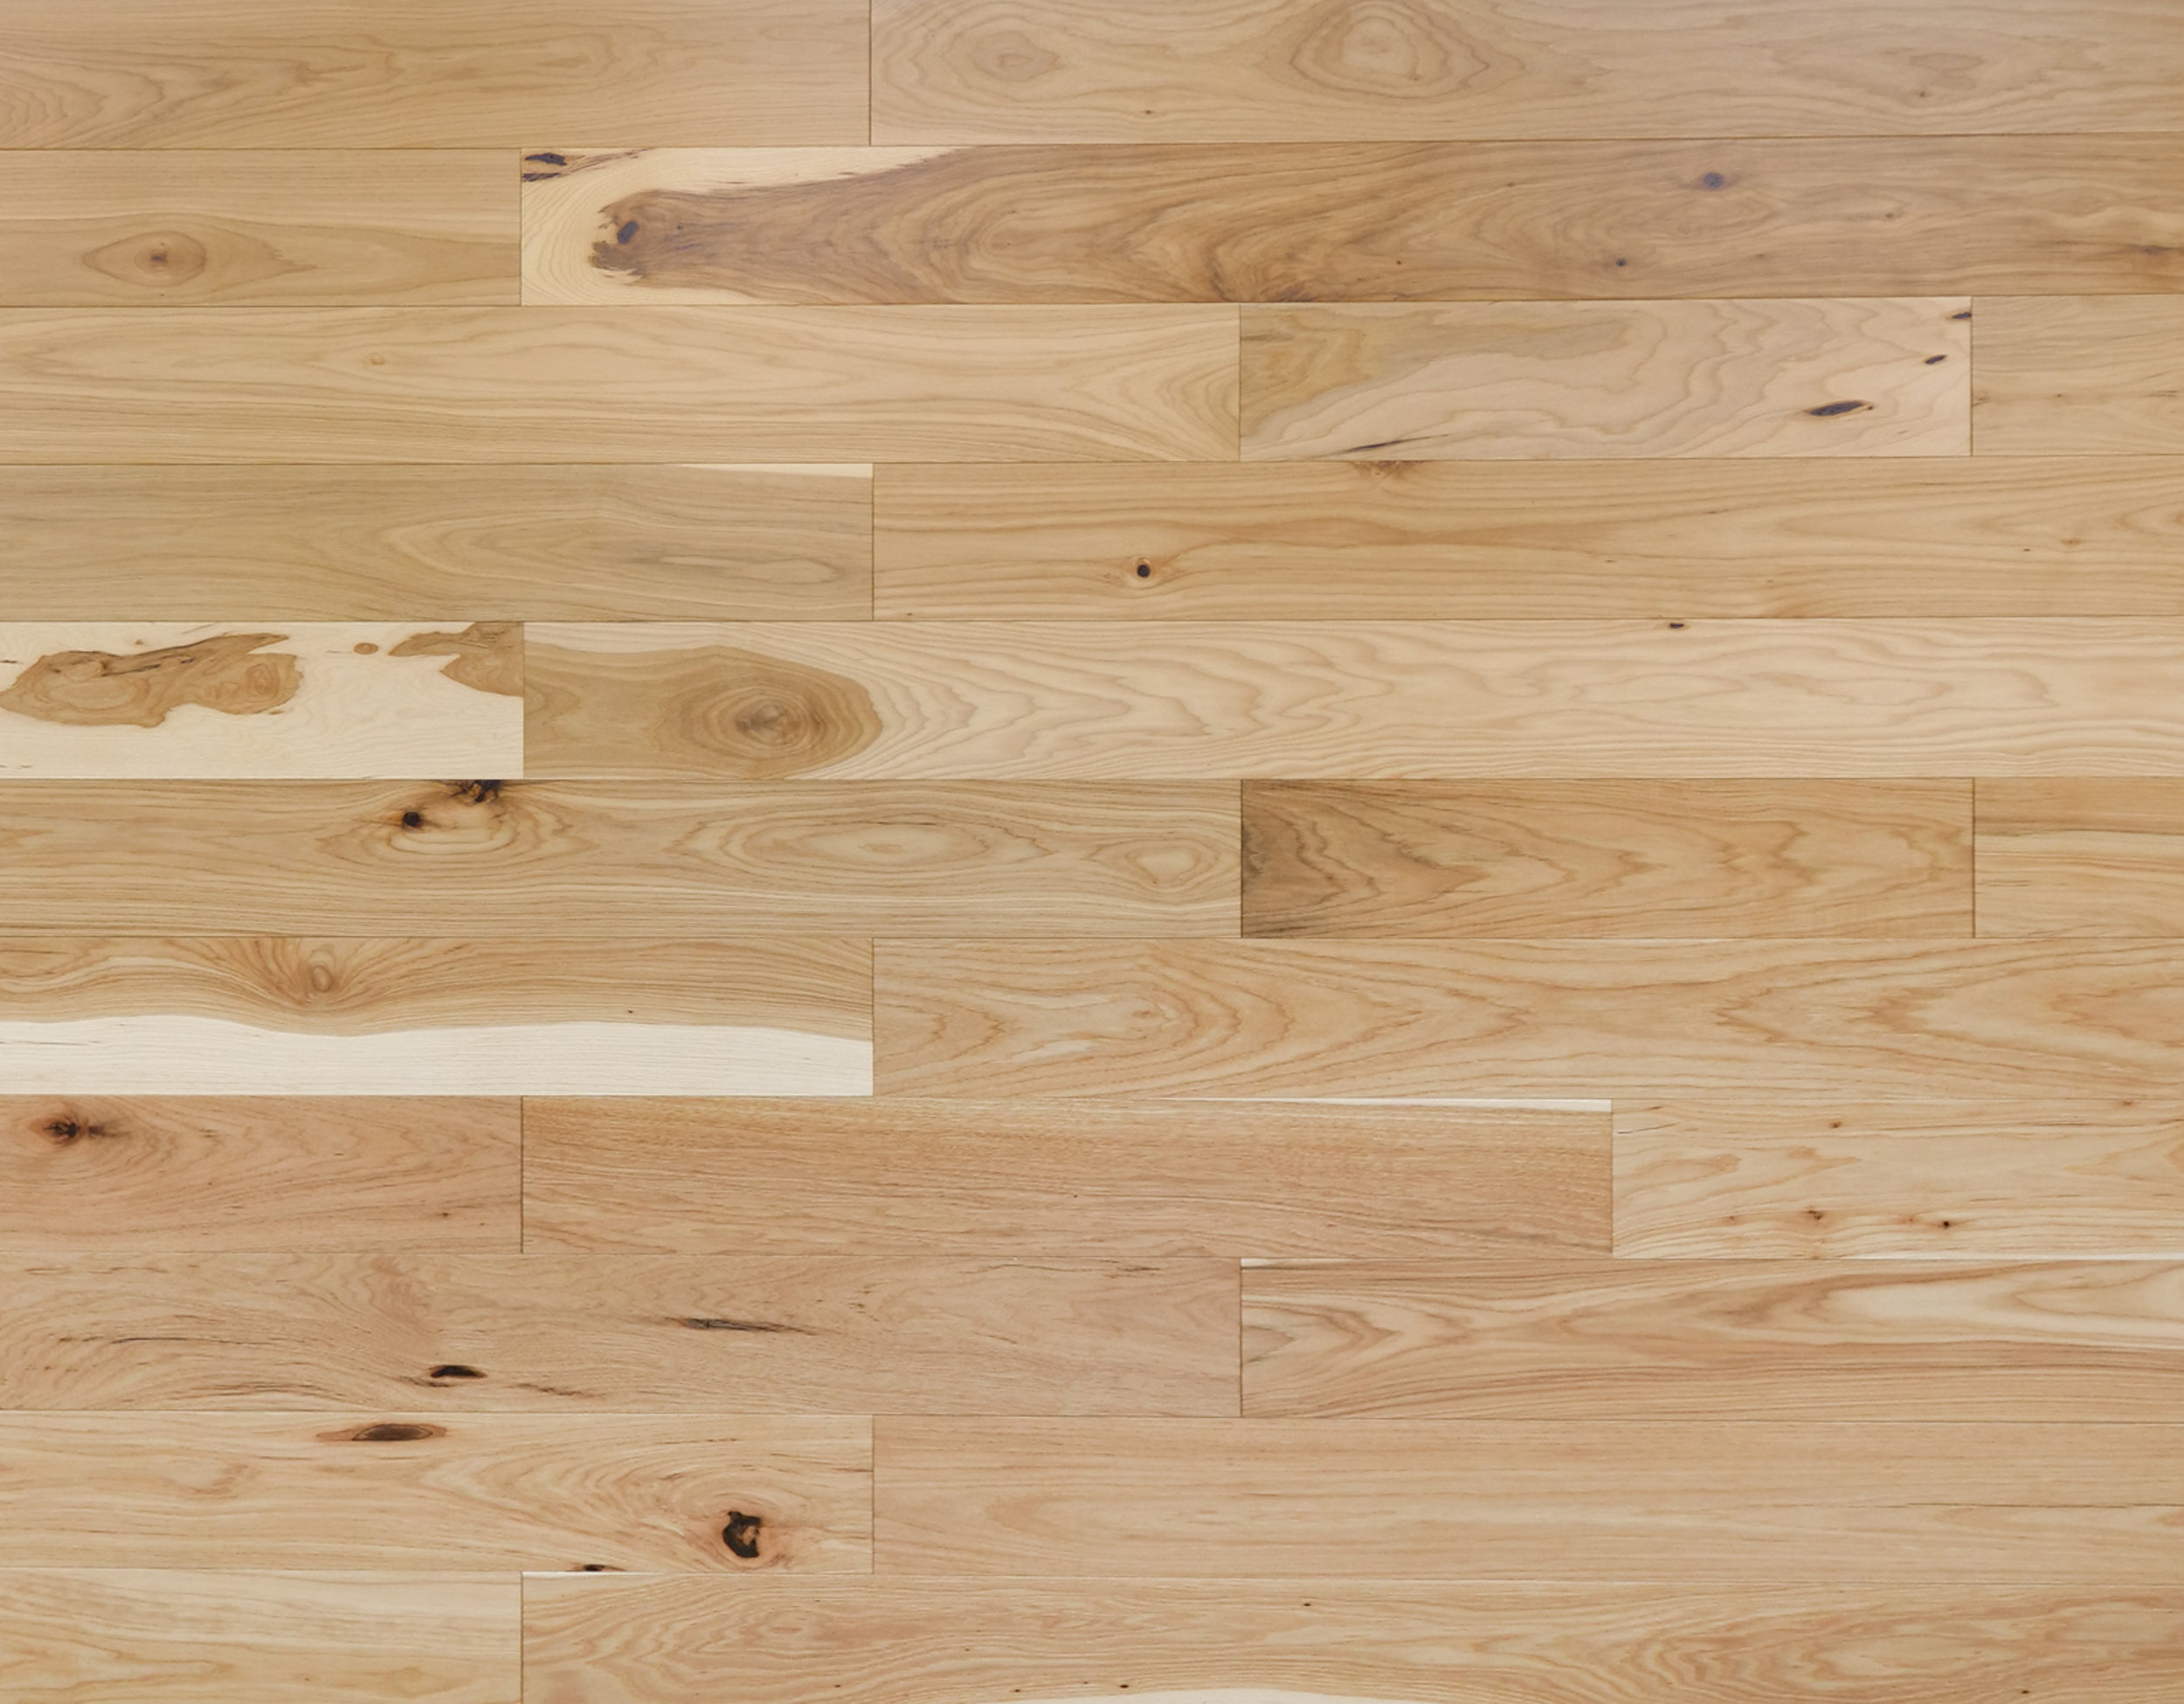 hickory hardwood flooring options